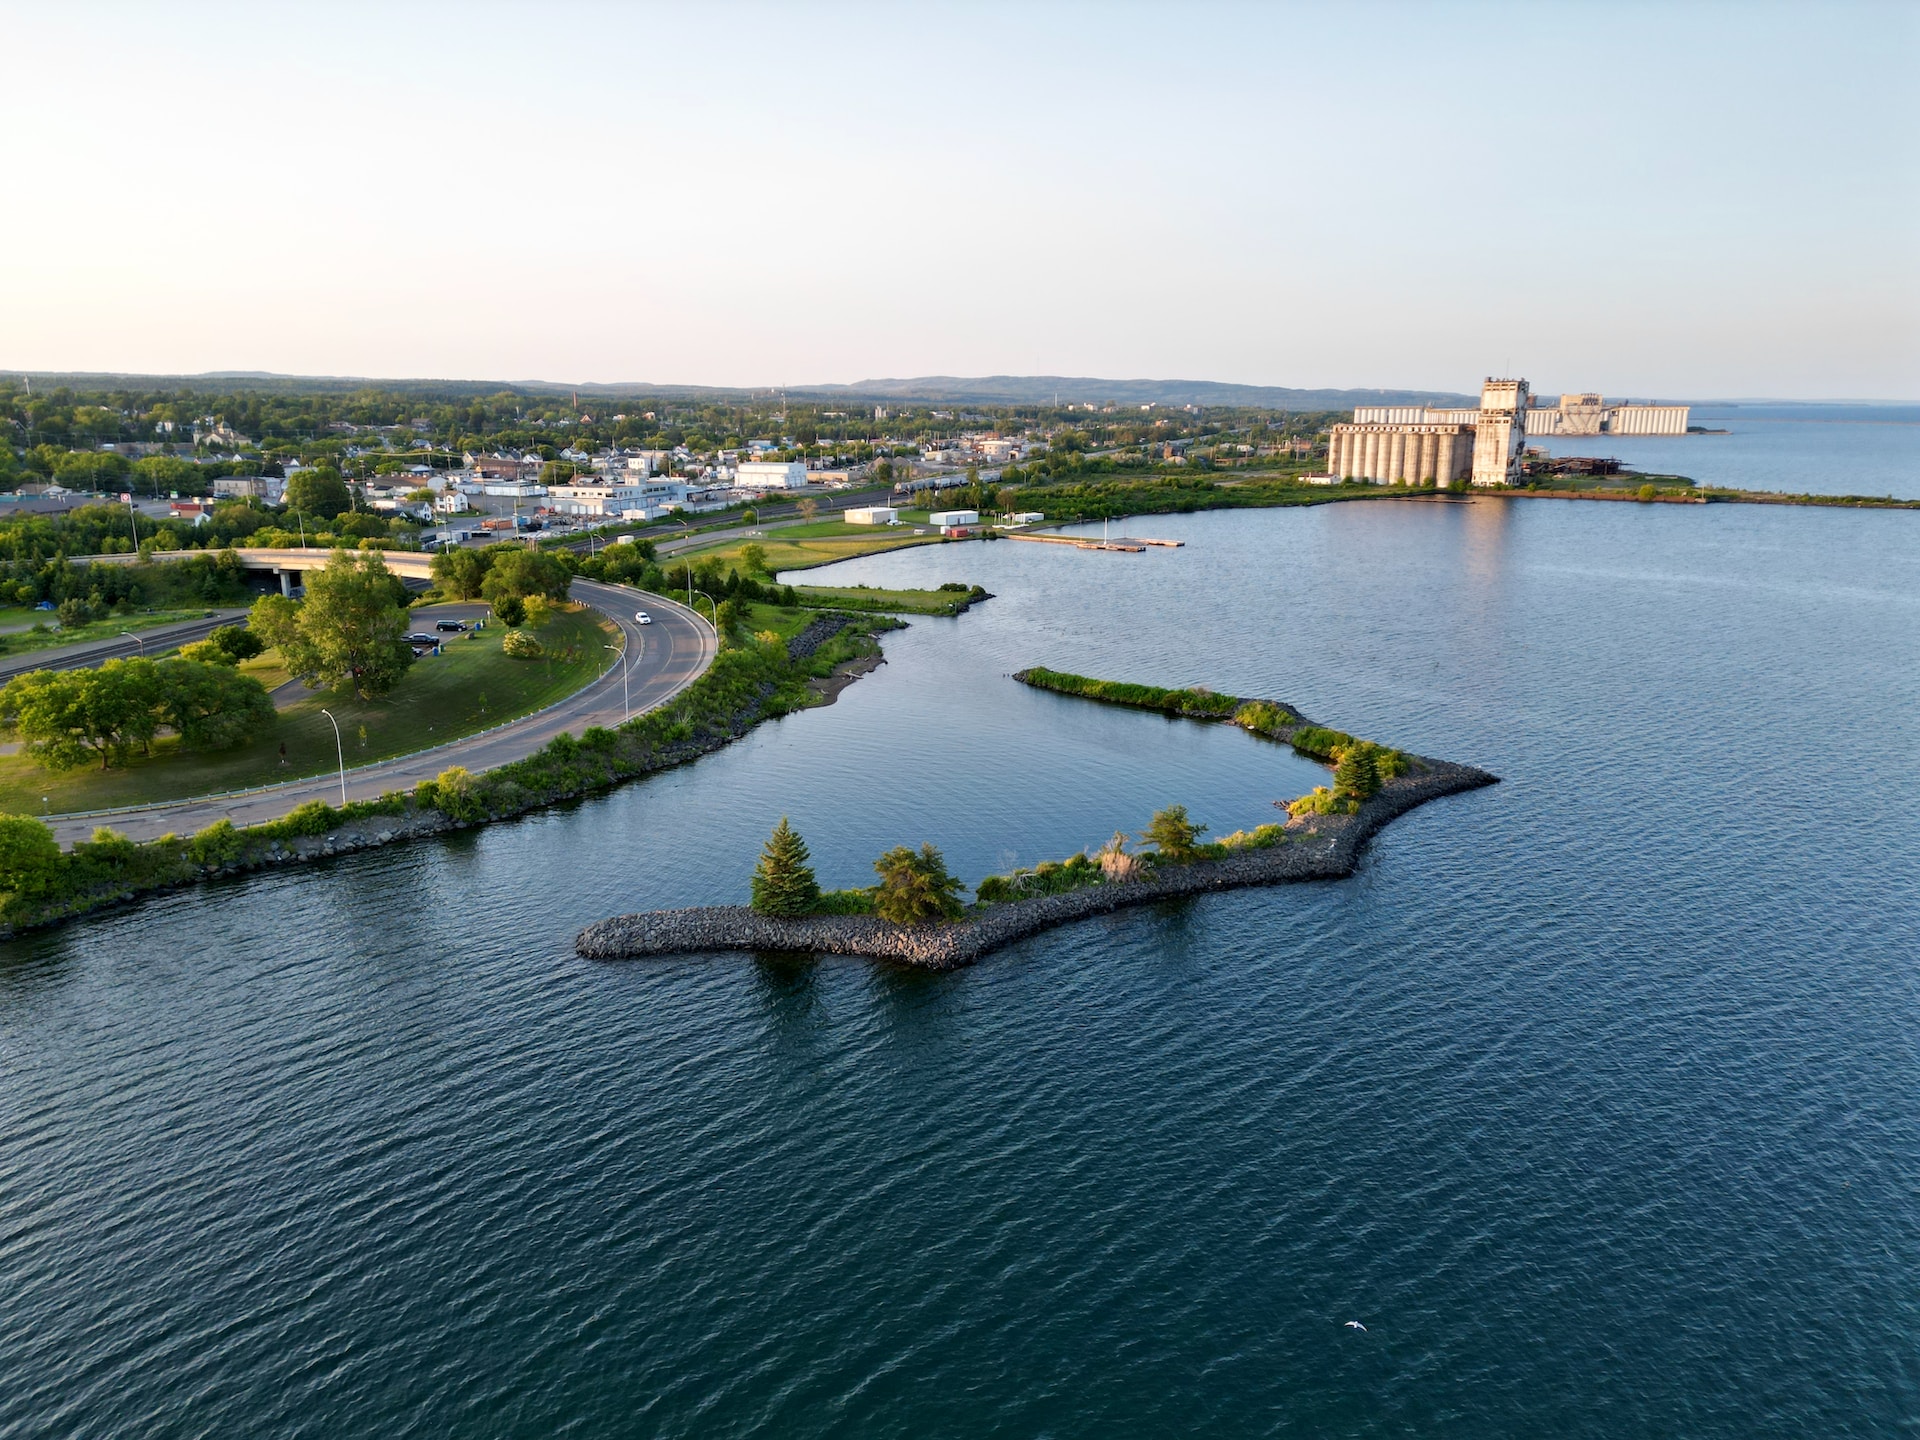 Wave of medical imaging innovation hits shores of Lake Superior